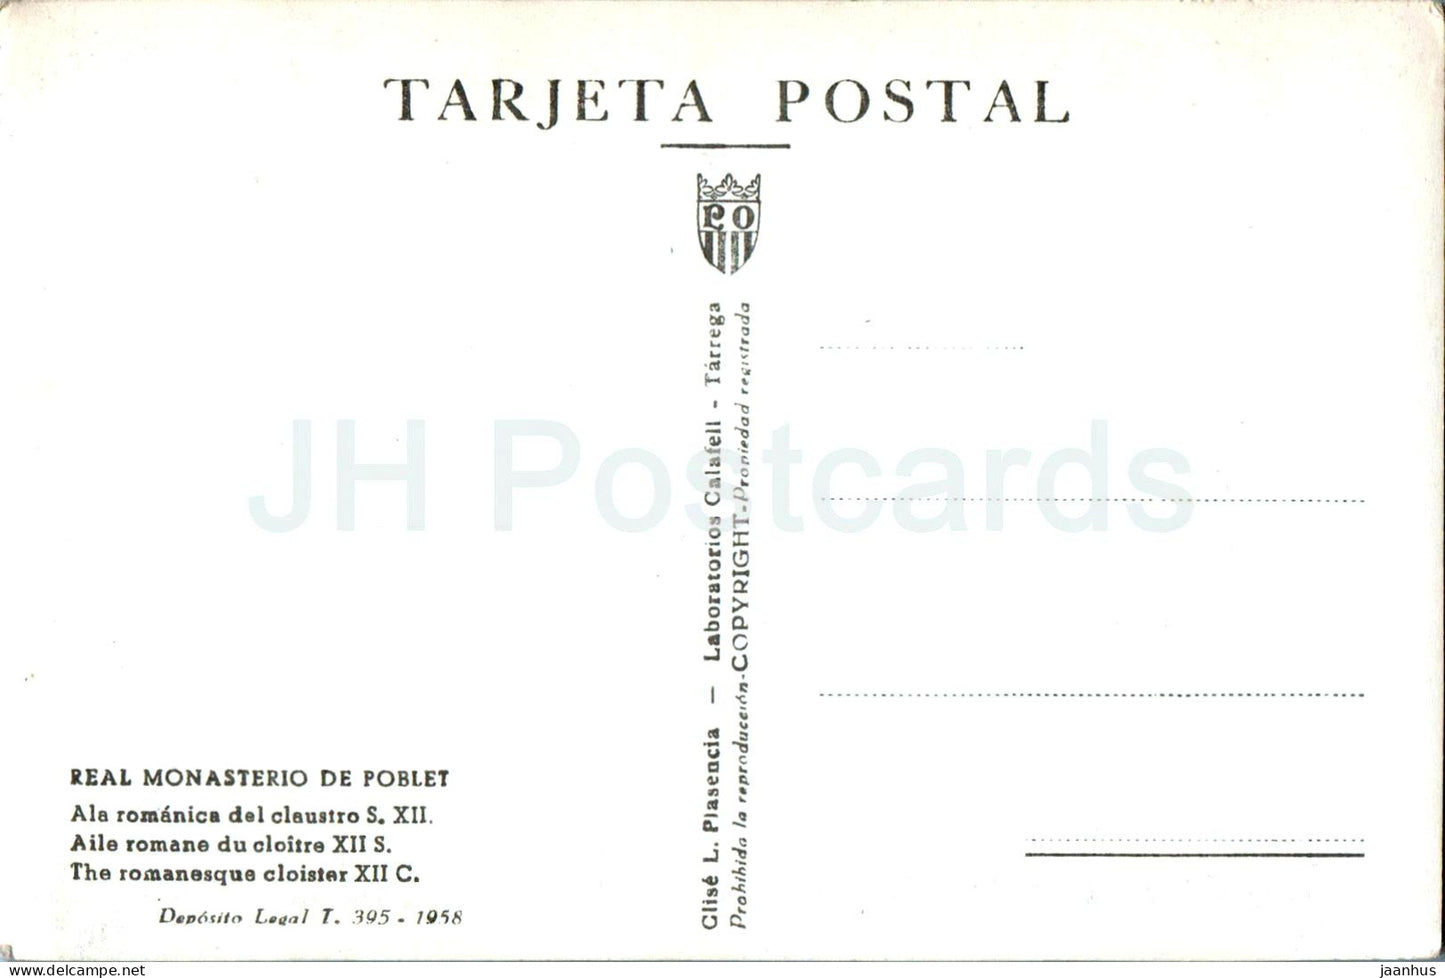 Real Monasterio de Poblet - Ala romanica del claustro - the romanesque cloister - old postcard - 1958 - Spain - unused